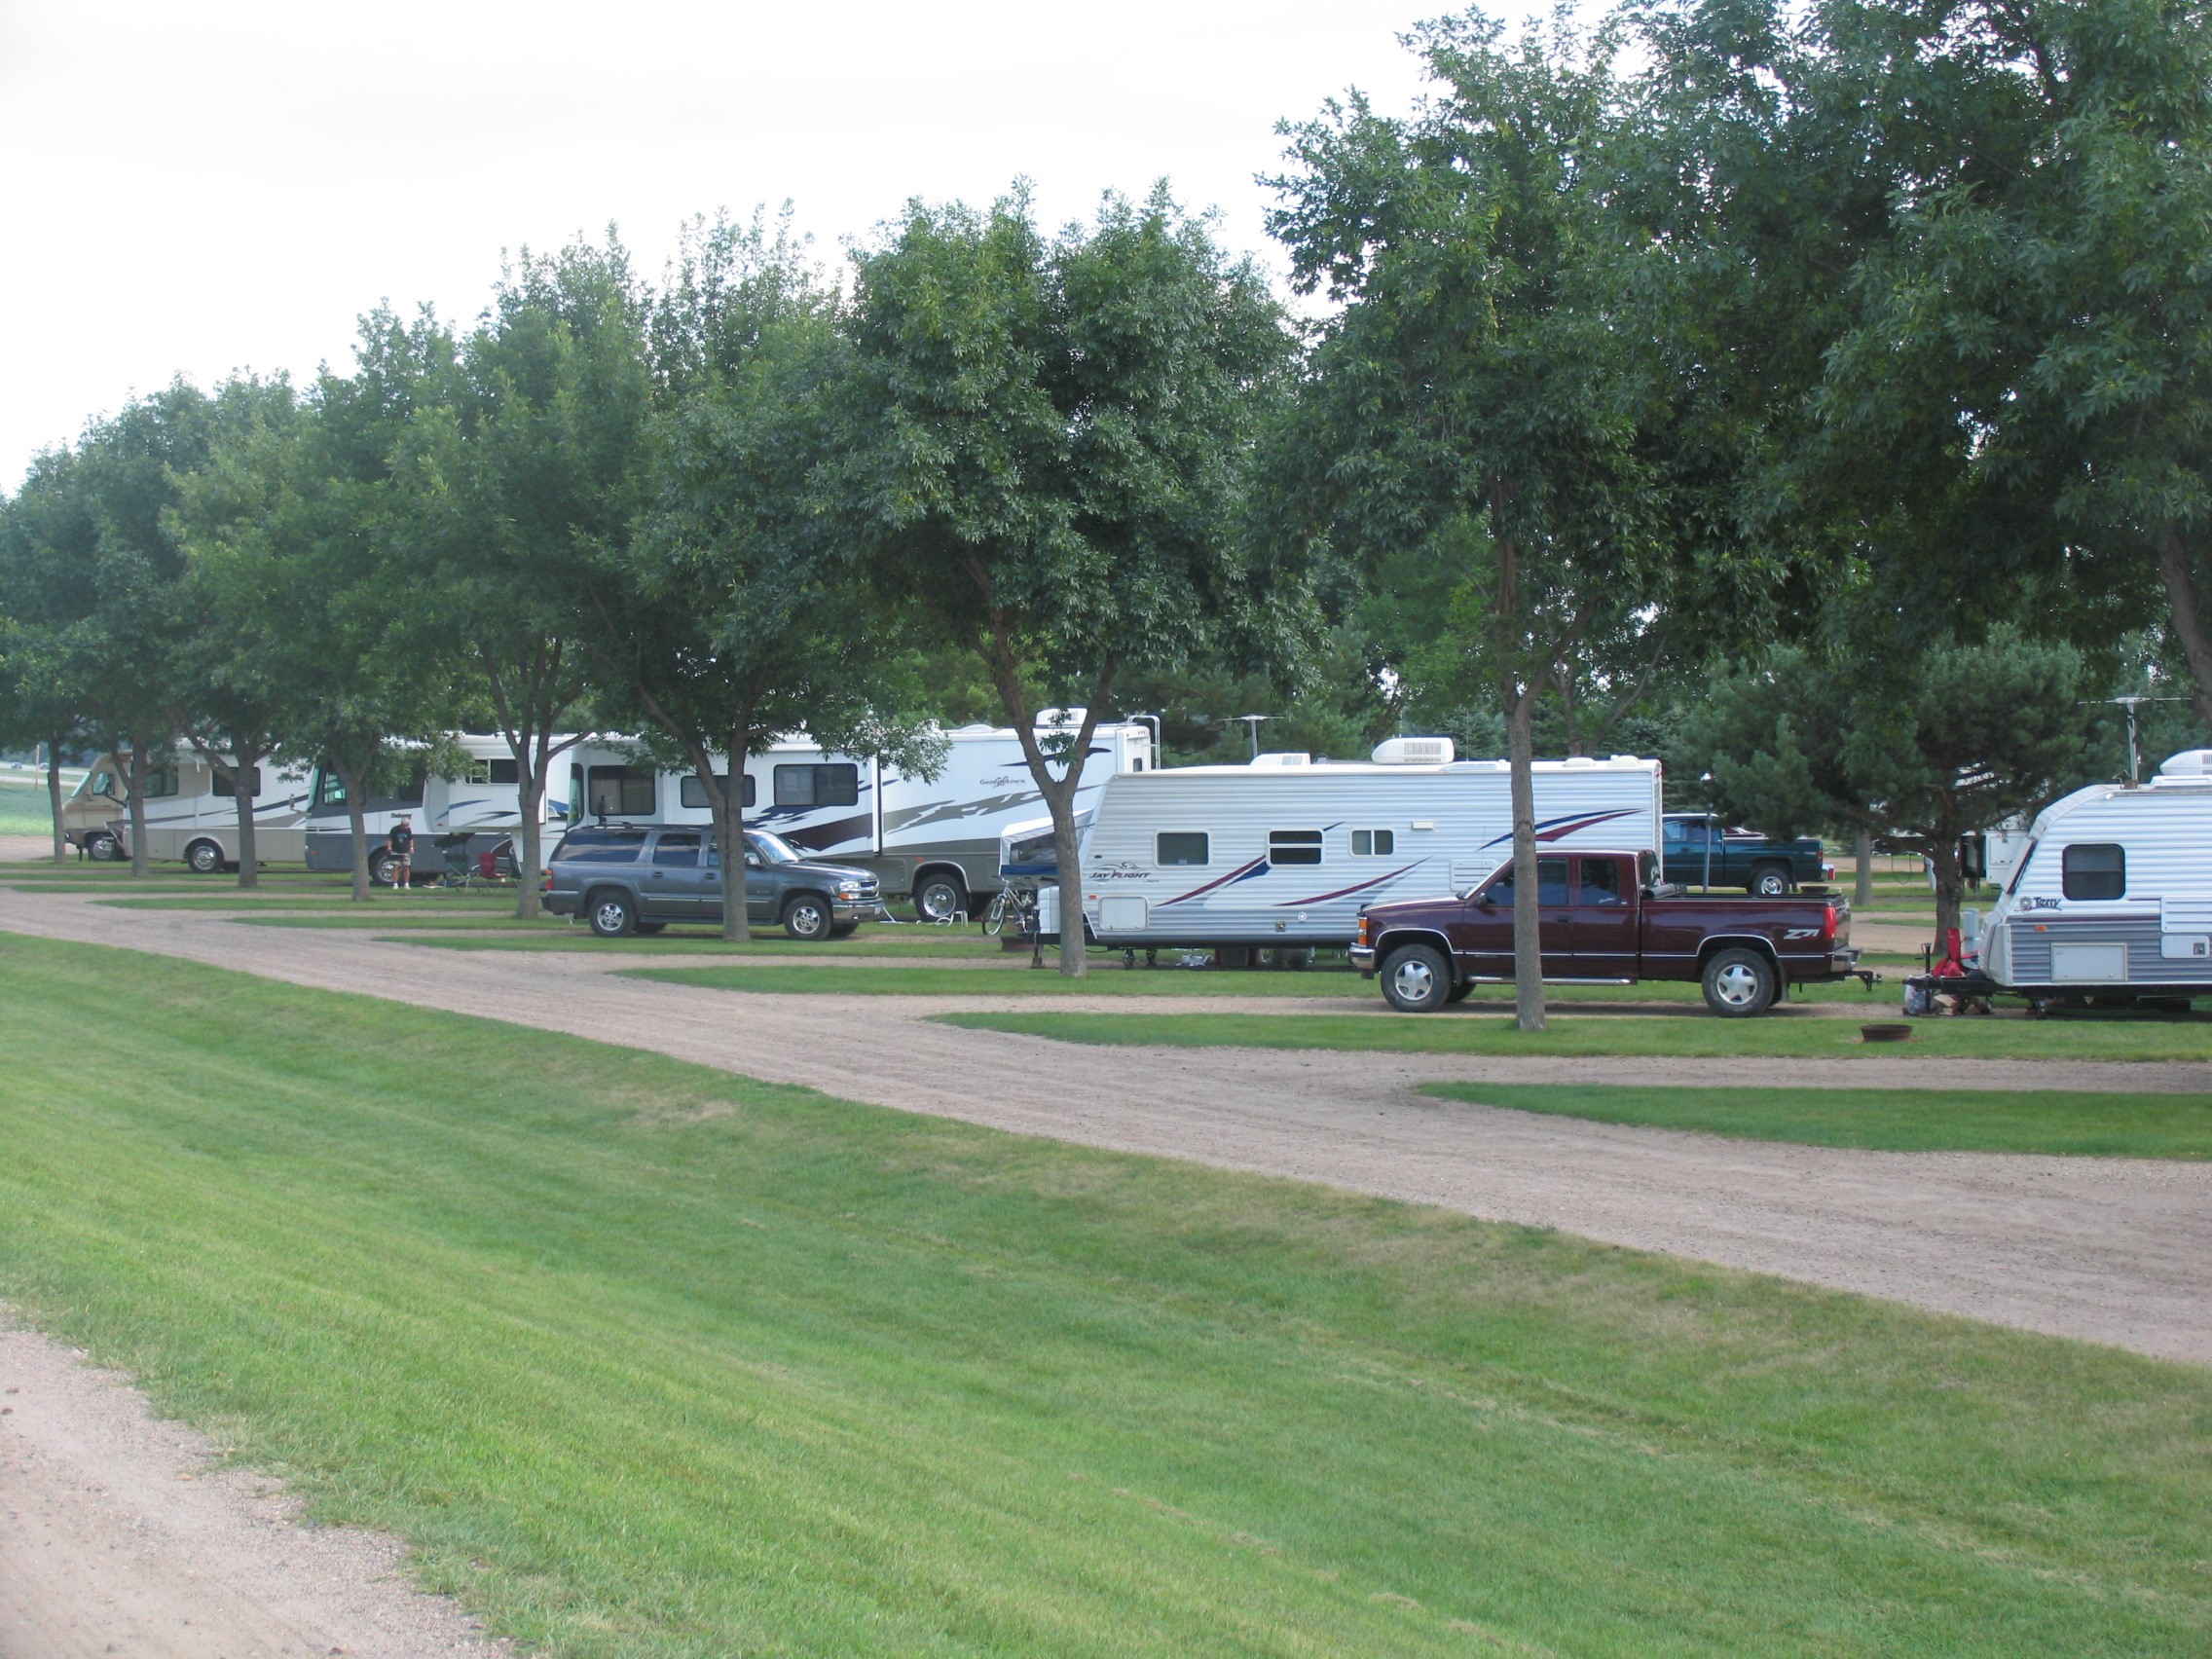 Campsite at RV park Sioux Falls SD